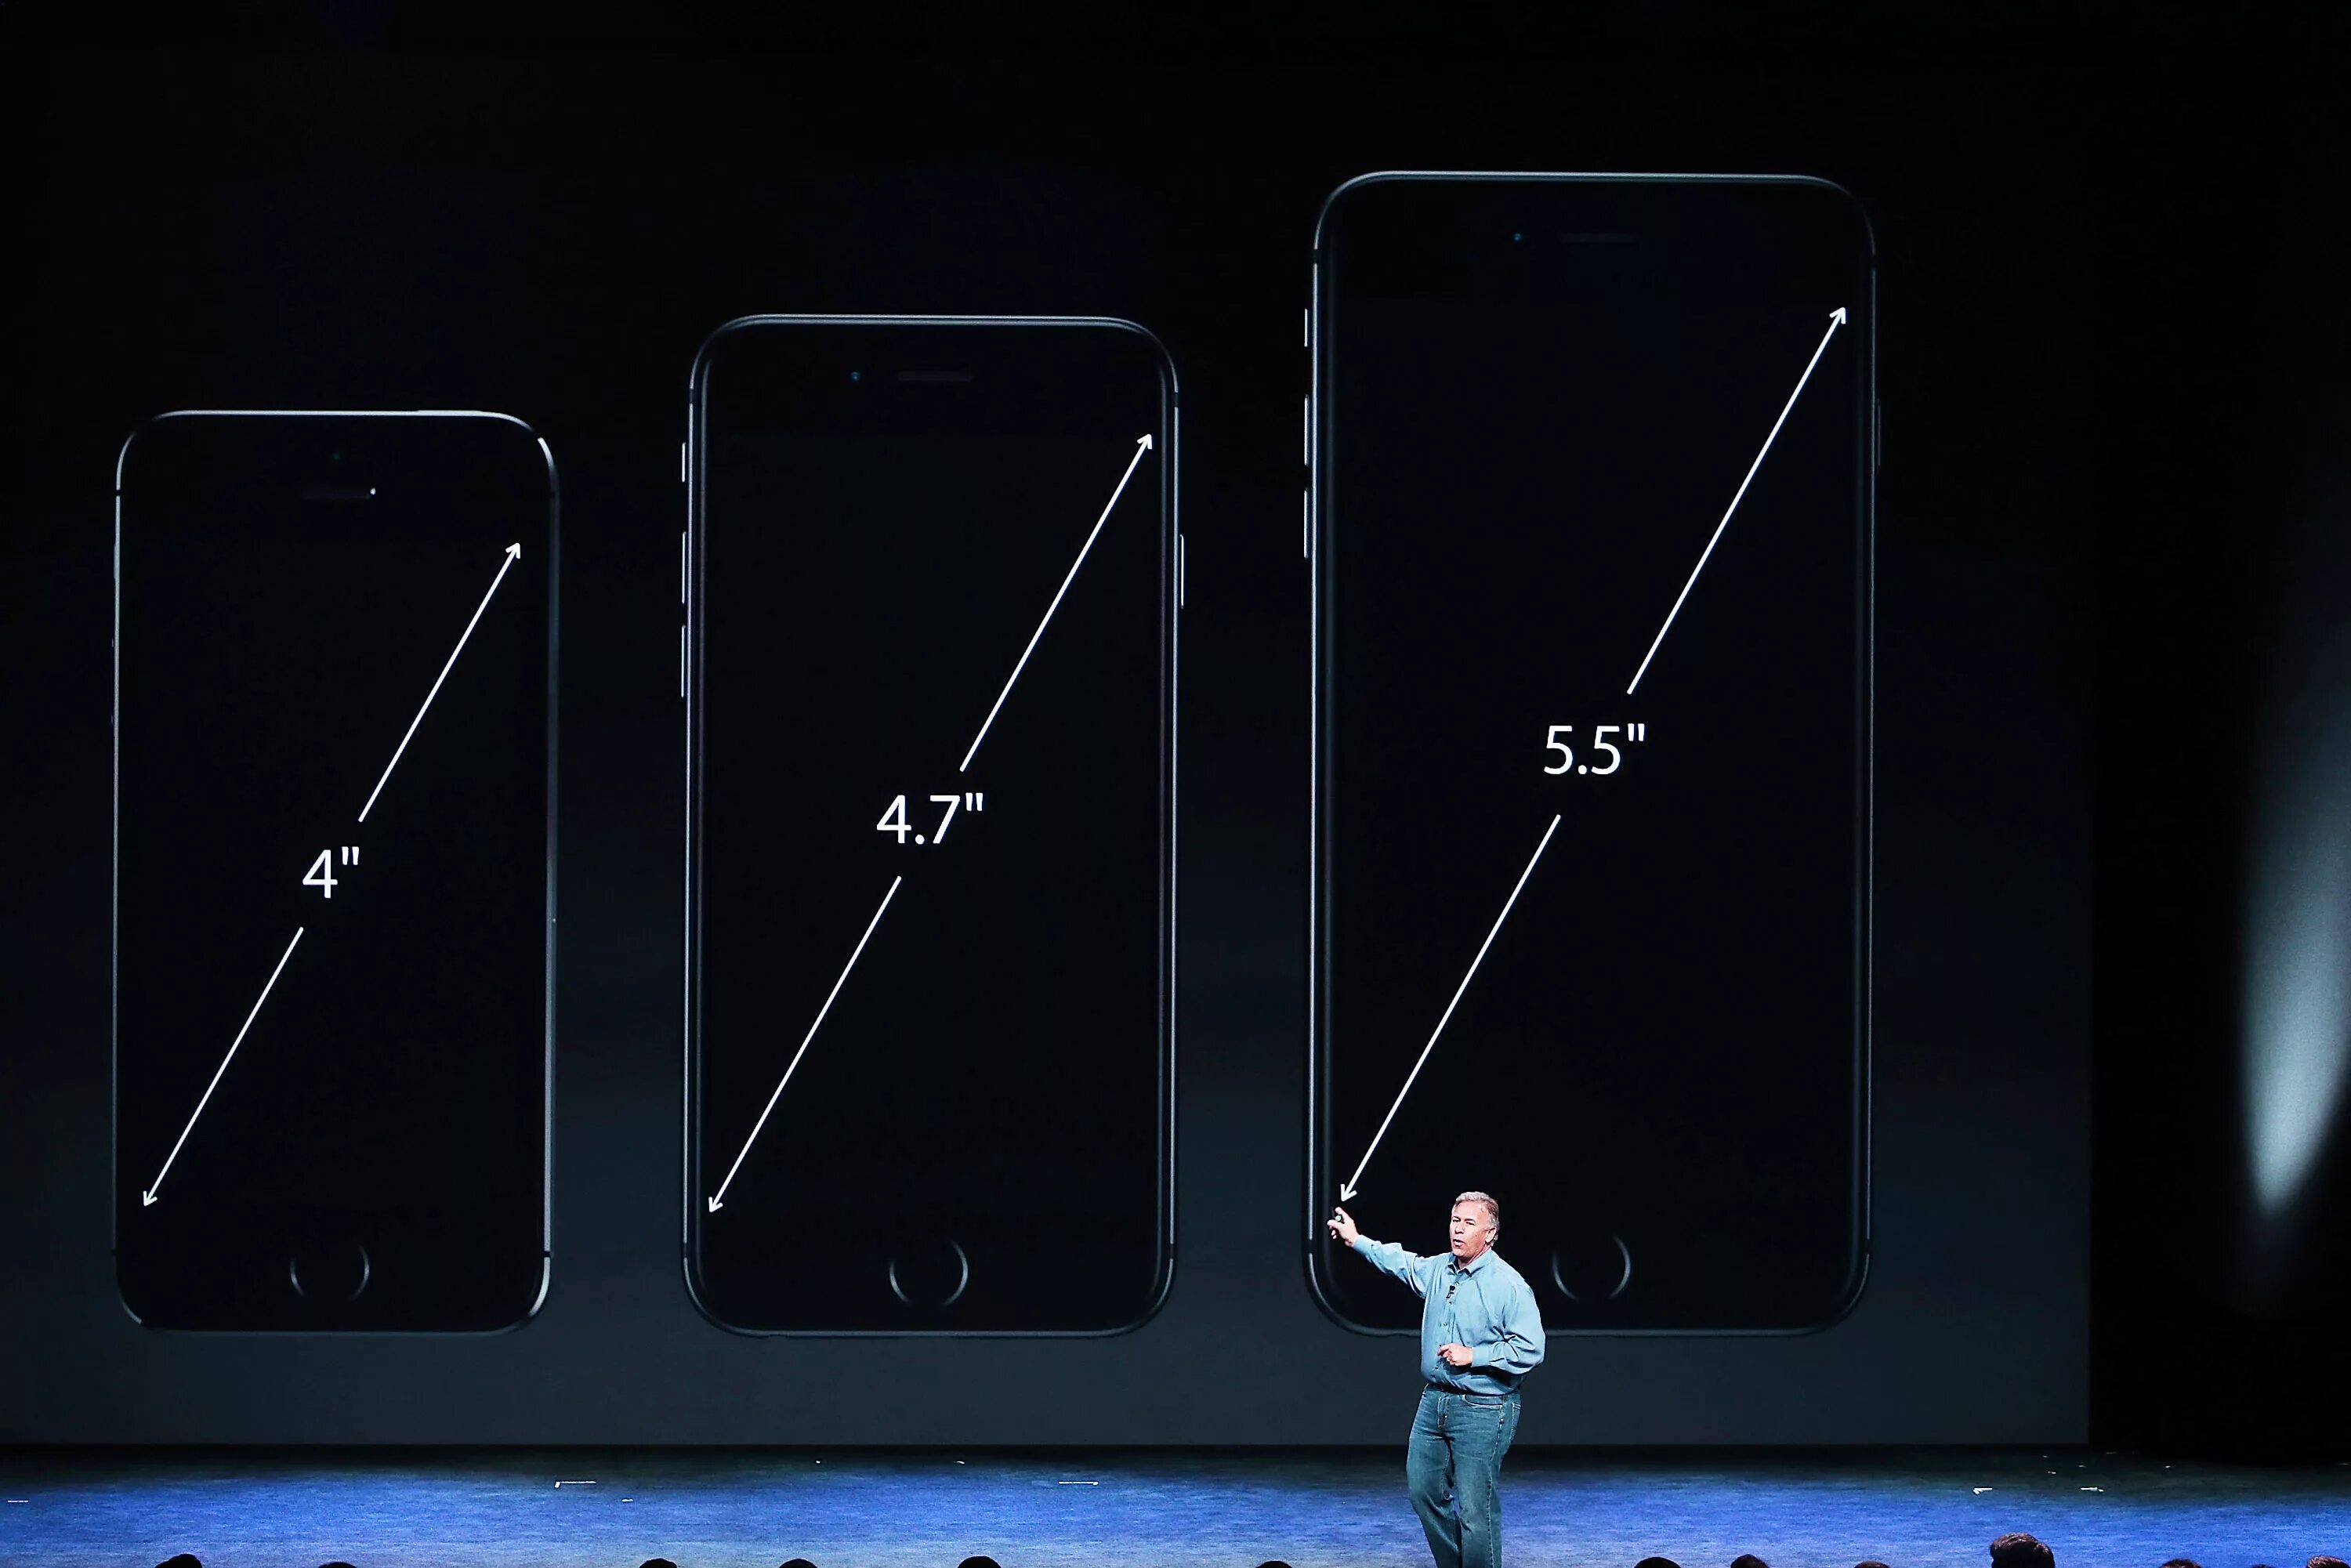 Диагональ 4 3 дюйма. Айфон 6 диагональ экрана. Iphone 6 Plus диагональ экрана. Айфон диагональ 6.1. Айфон 6s диагональ экрана.